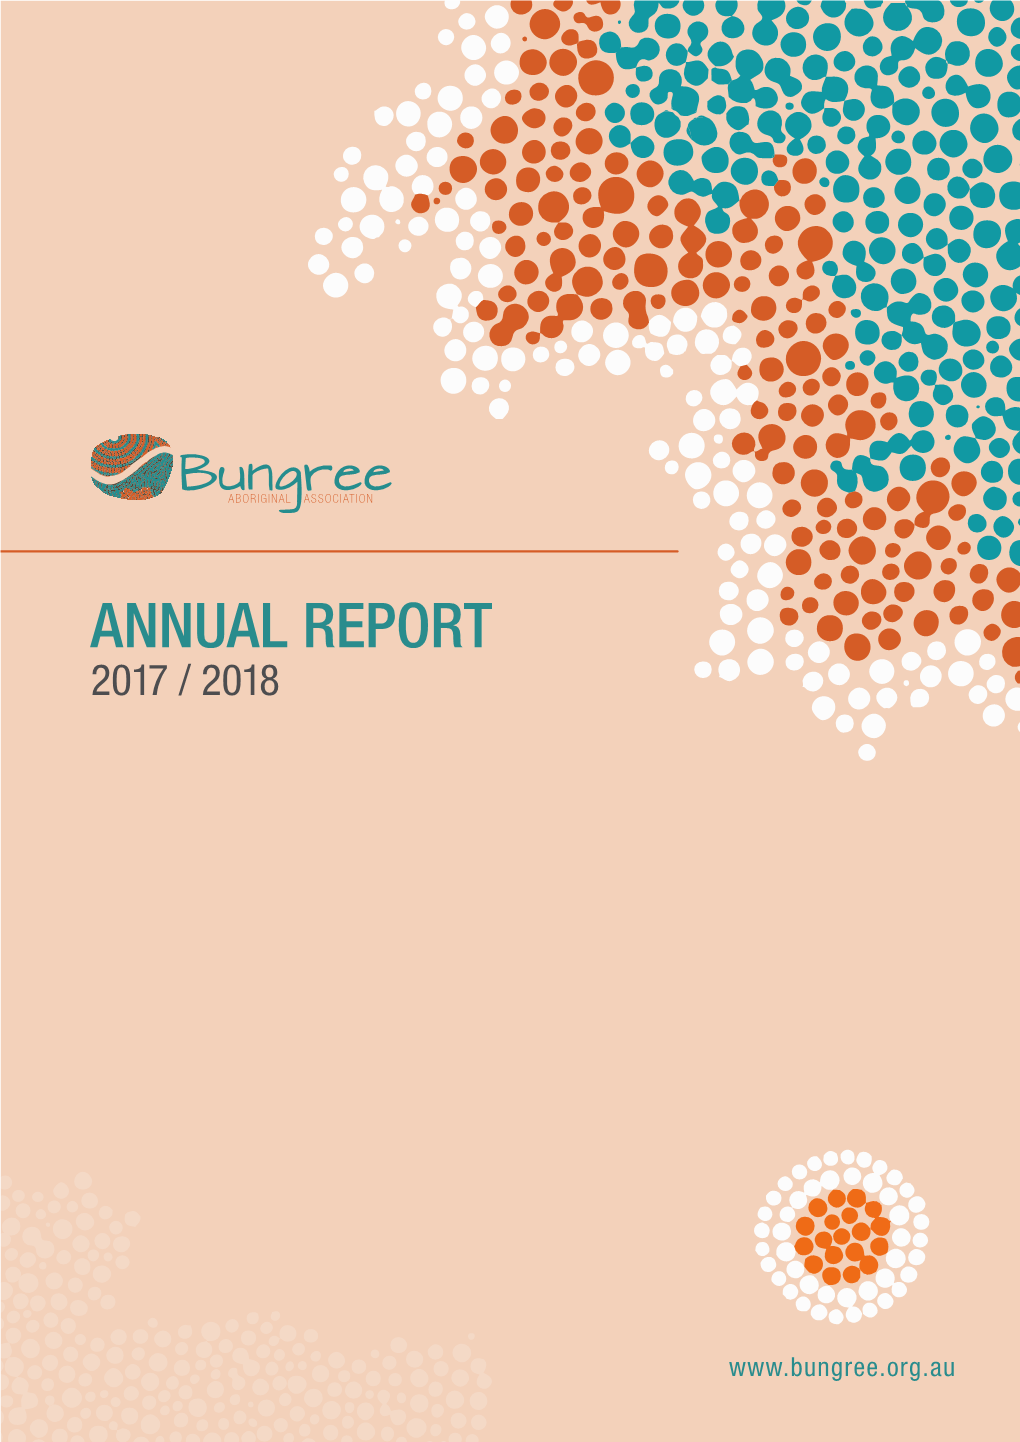 Annual Report 2017/18 Bungree Aboriginal Association